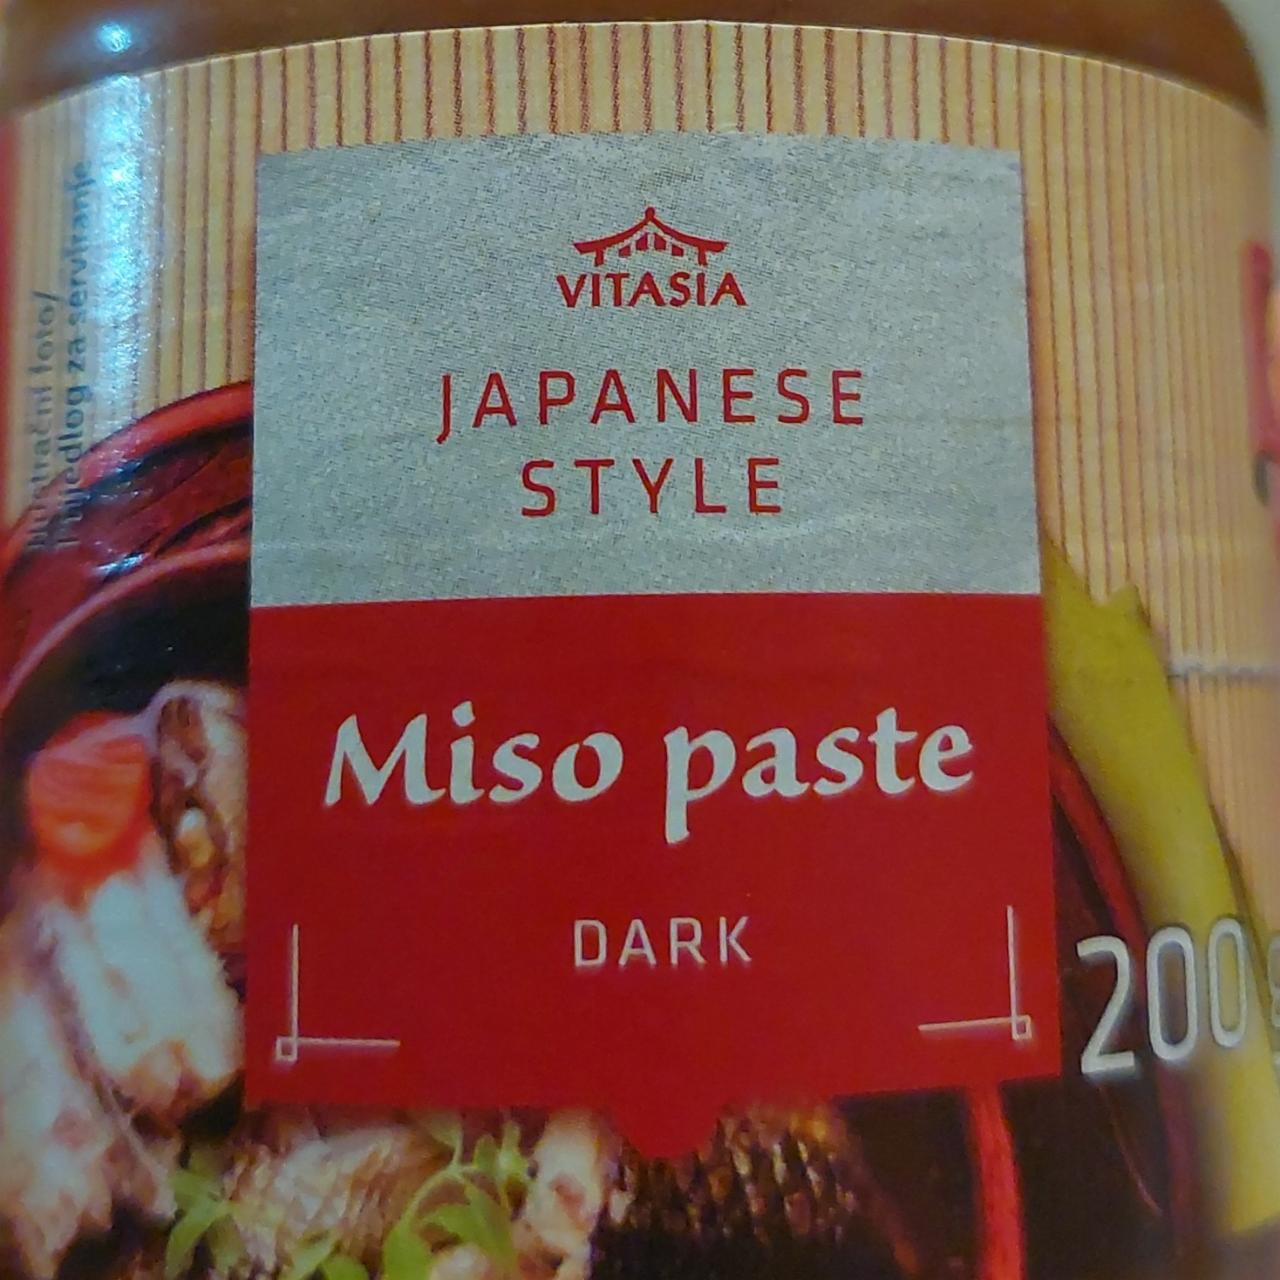 Fotografie - Miso paste Dark Vitasia Japanese style